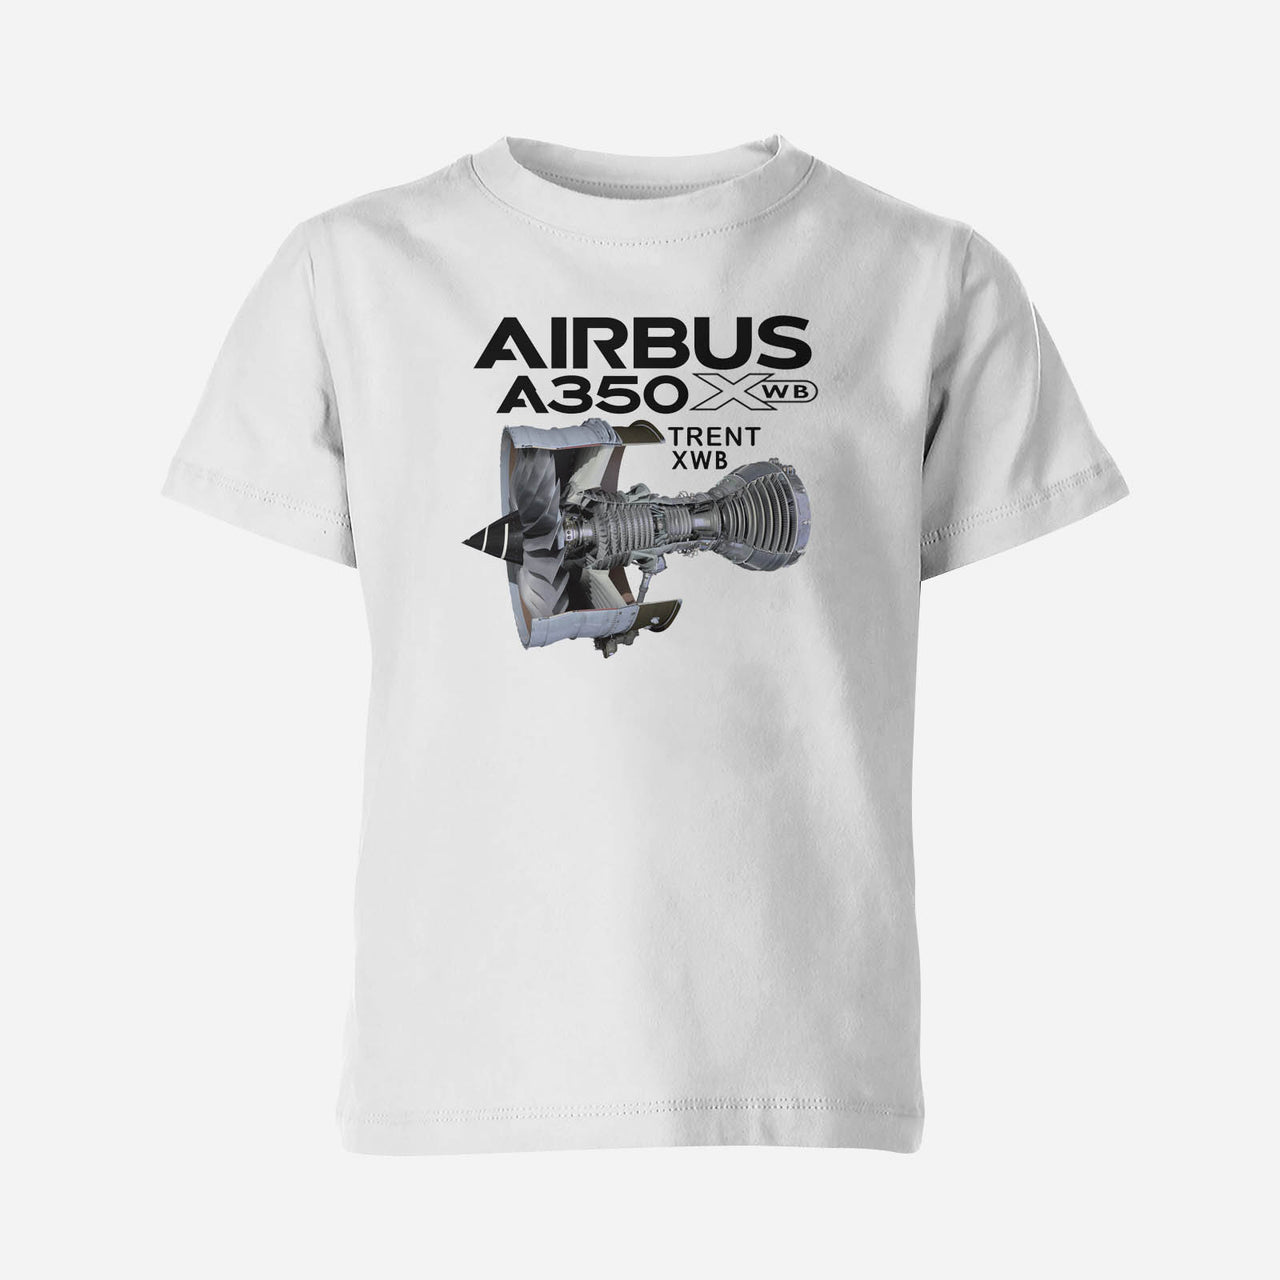 Airbus A350 & Trent XWB Engine Designed Children T-Shirts